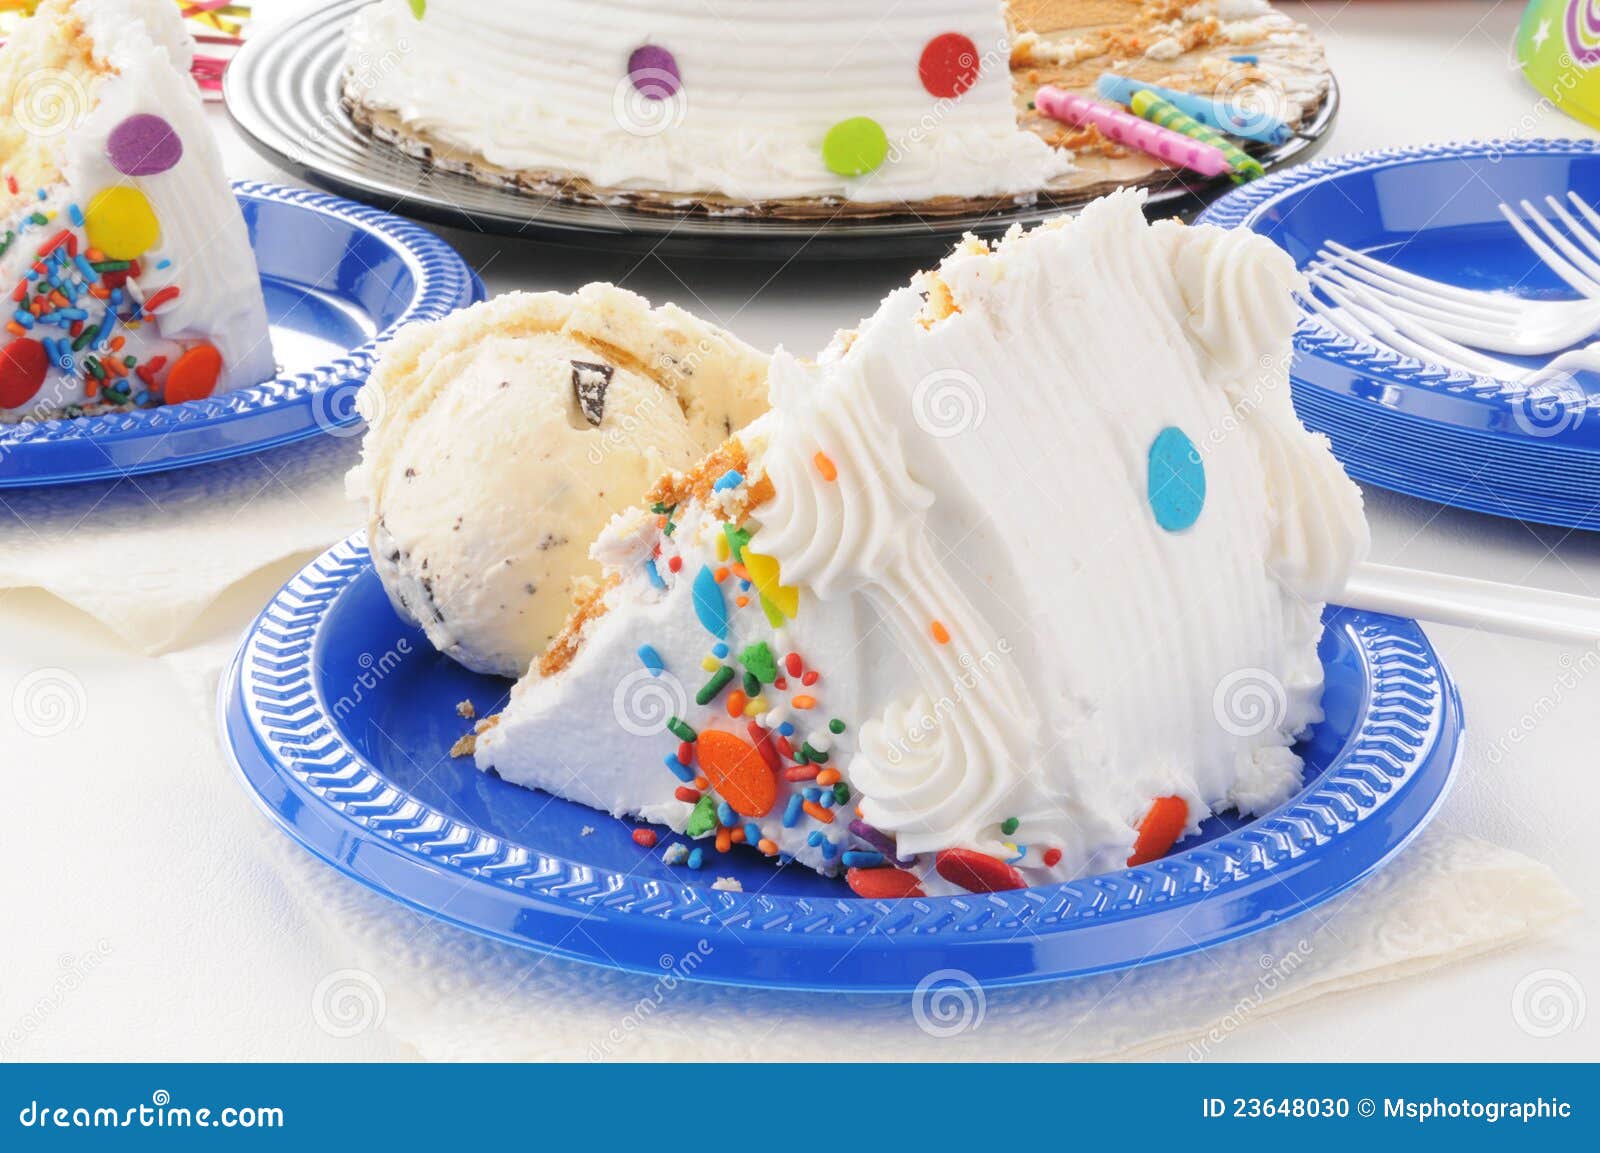 cake and ice cream clipart - photo #39